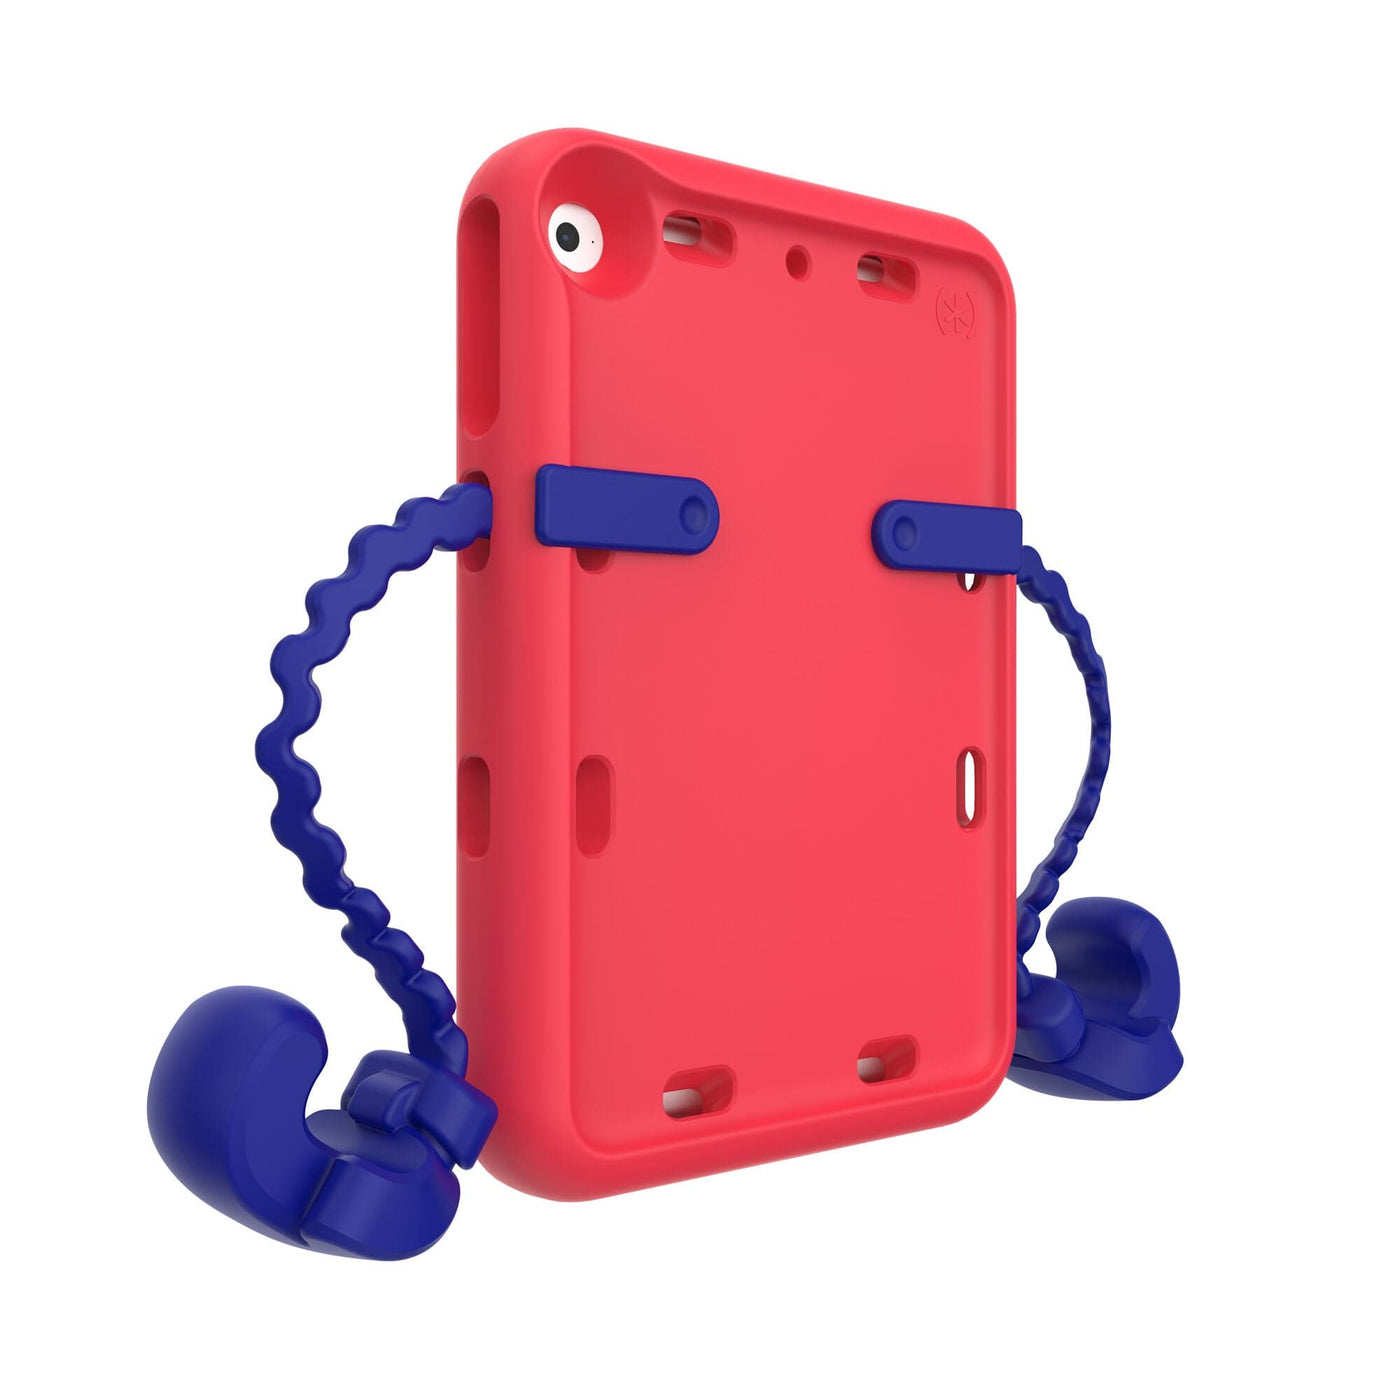 Speck Case-E iPad mini (5th generation) Cases Aquamarine Teal/Berrybold Purple